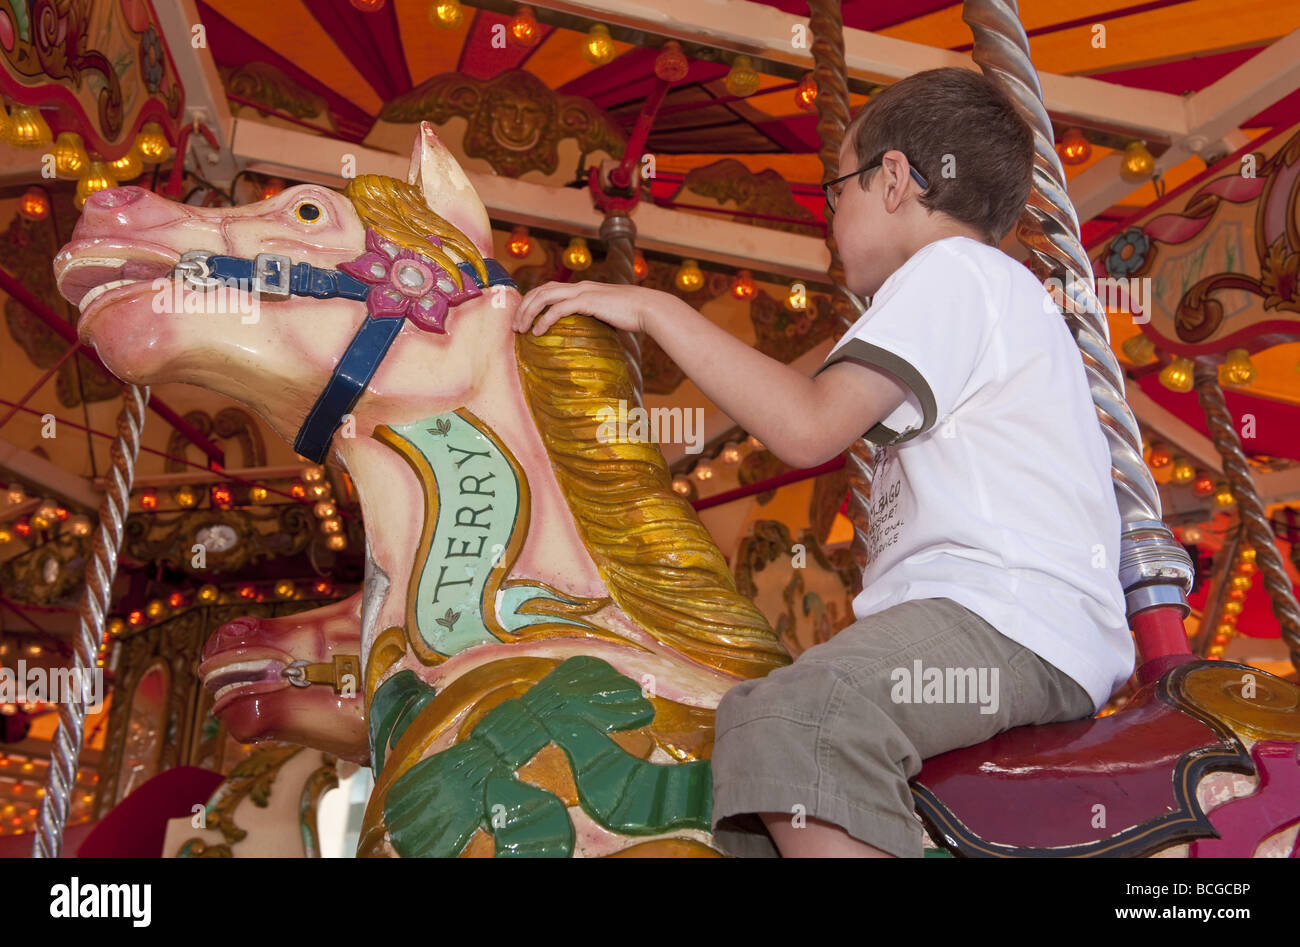 Young pre-teenage boy enjoys ride on horse on fairground carousel round about ride Stock Photo